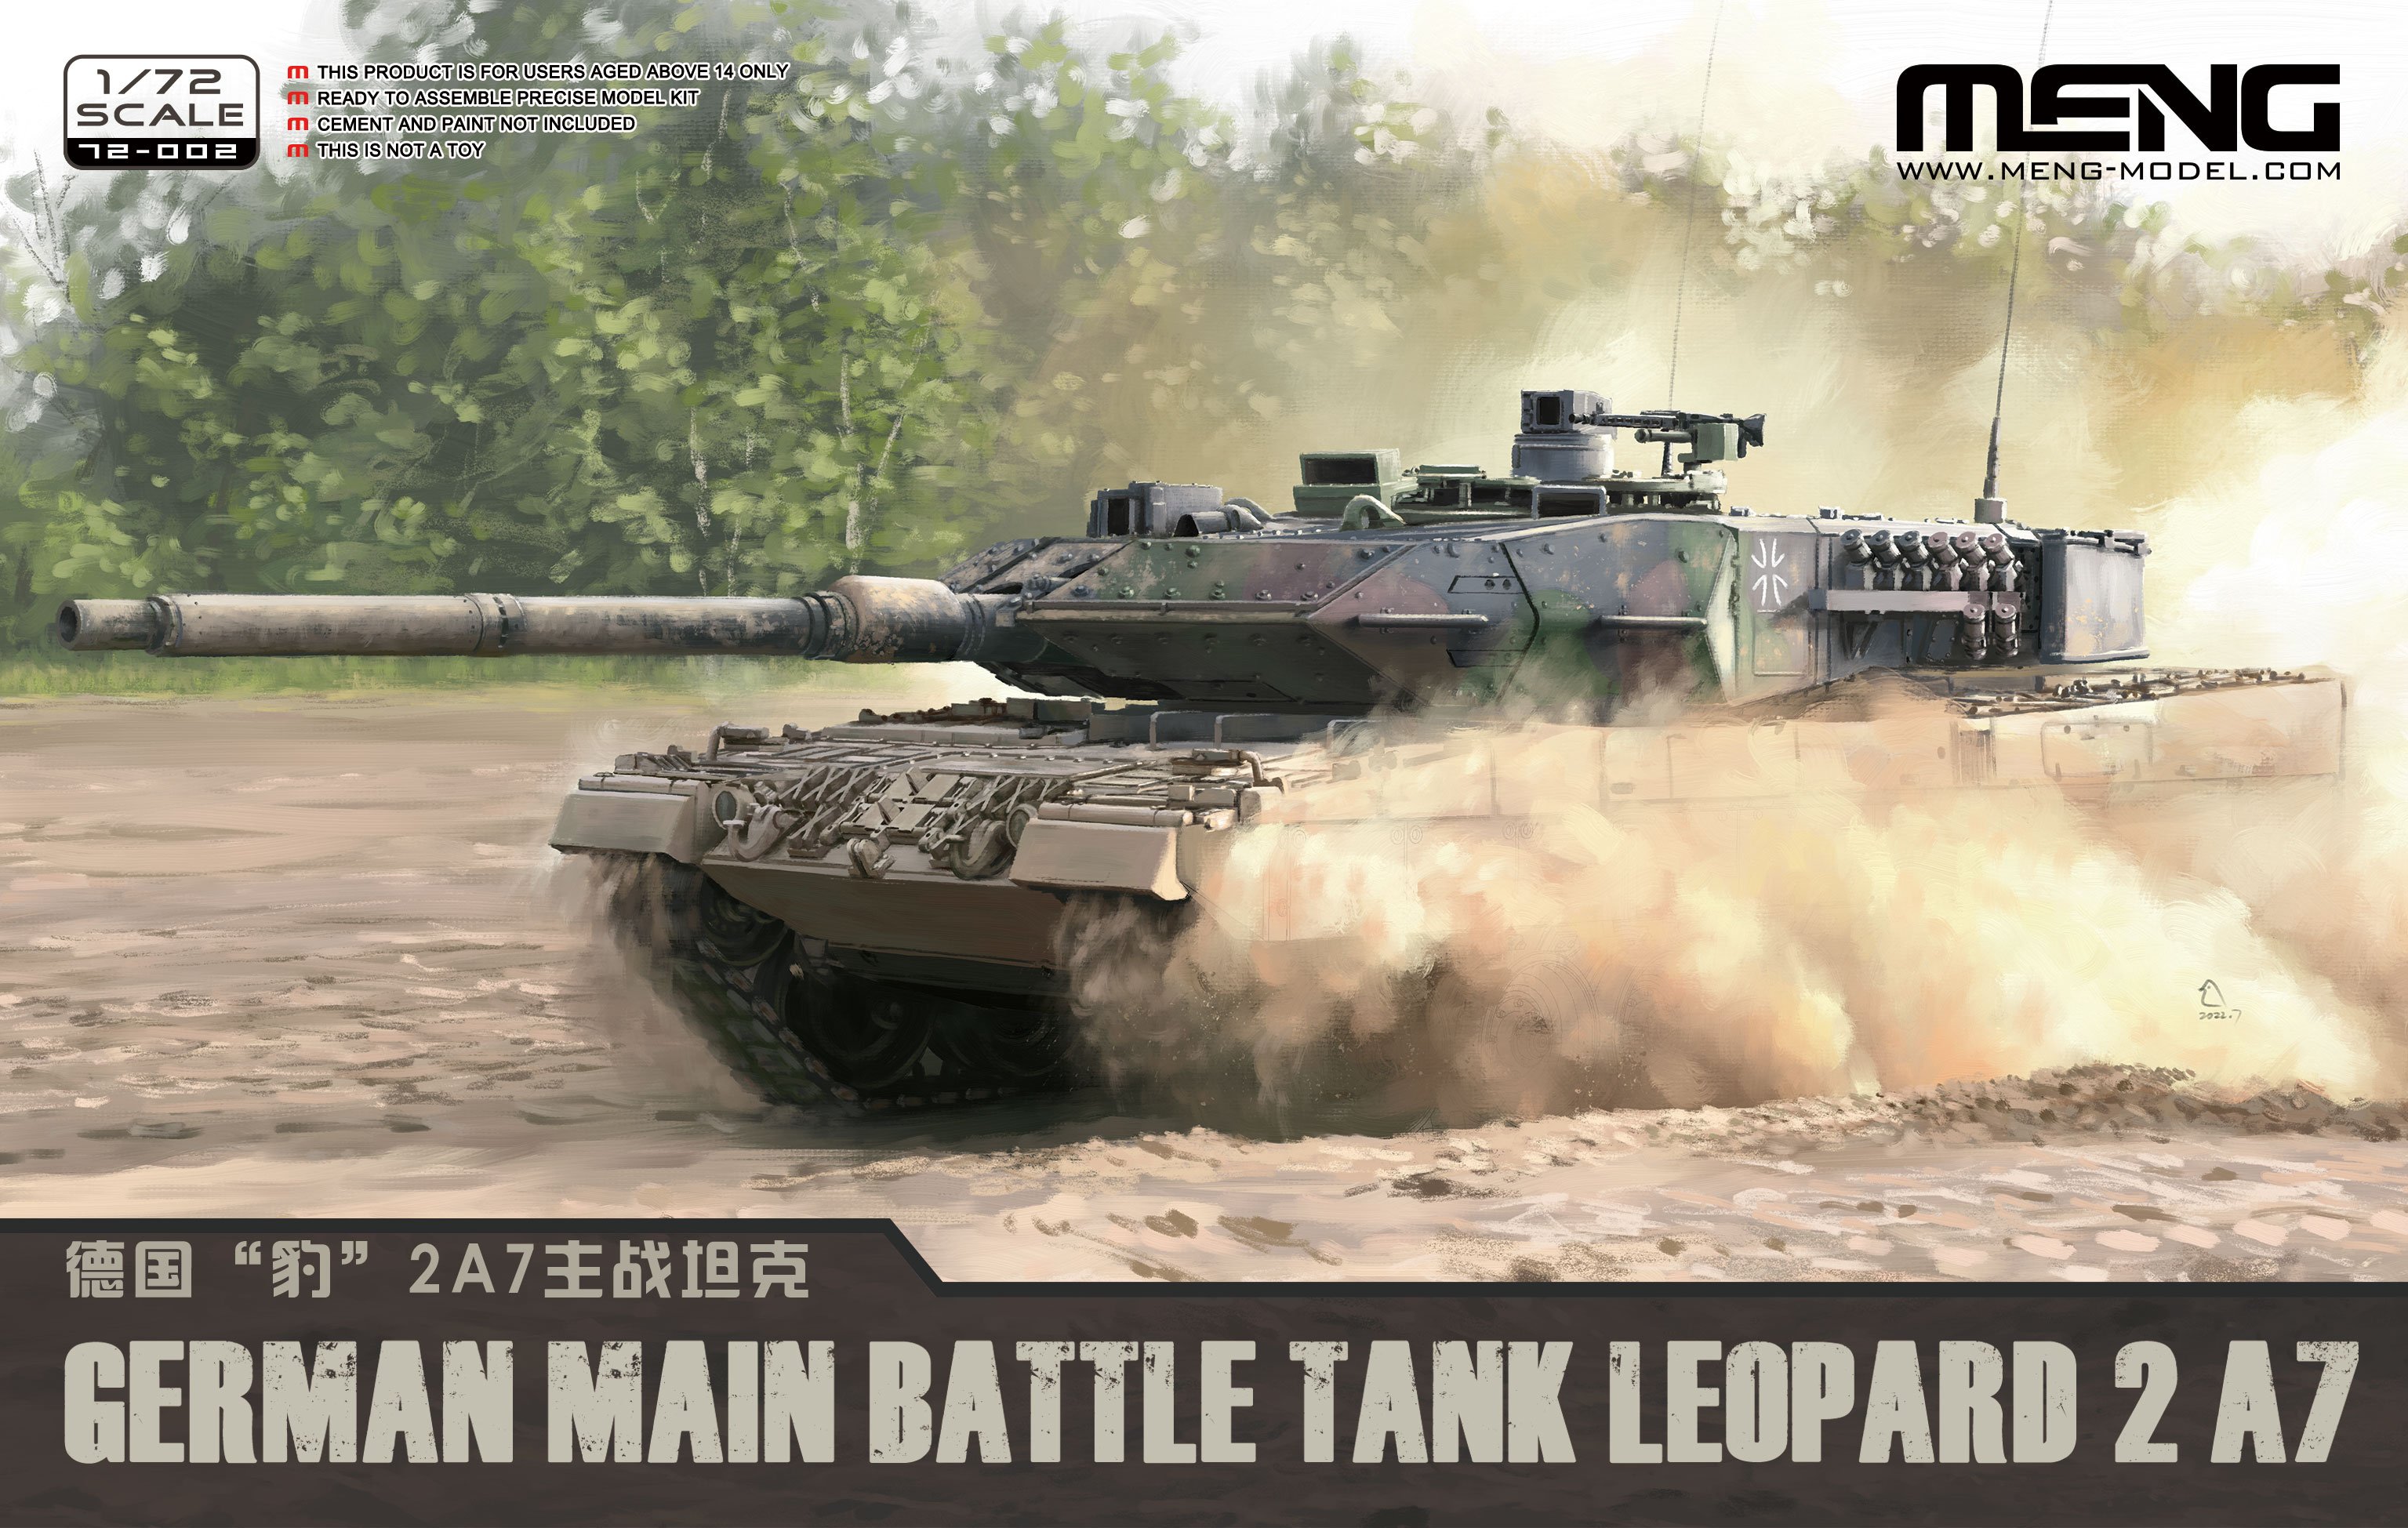 1/72 German Leopard 2A7 Main Battle Tank - Click Image to Close